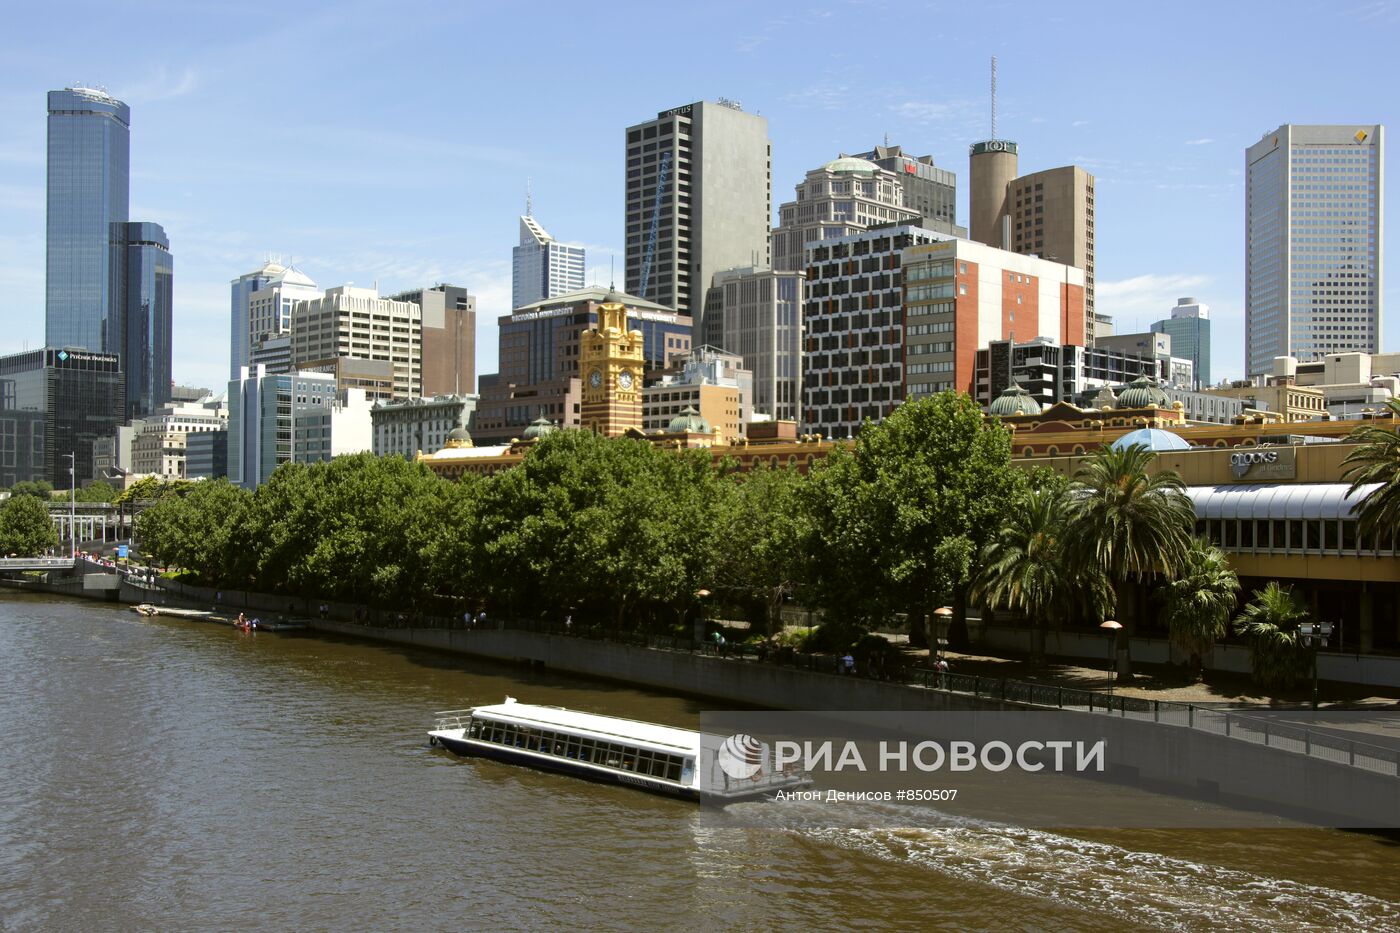 Вид на город Мельбурн со стороны реки Ярра.